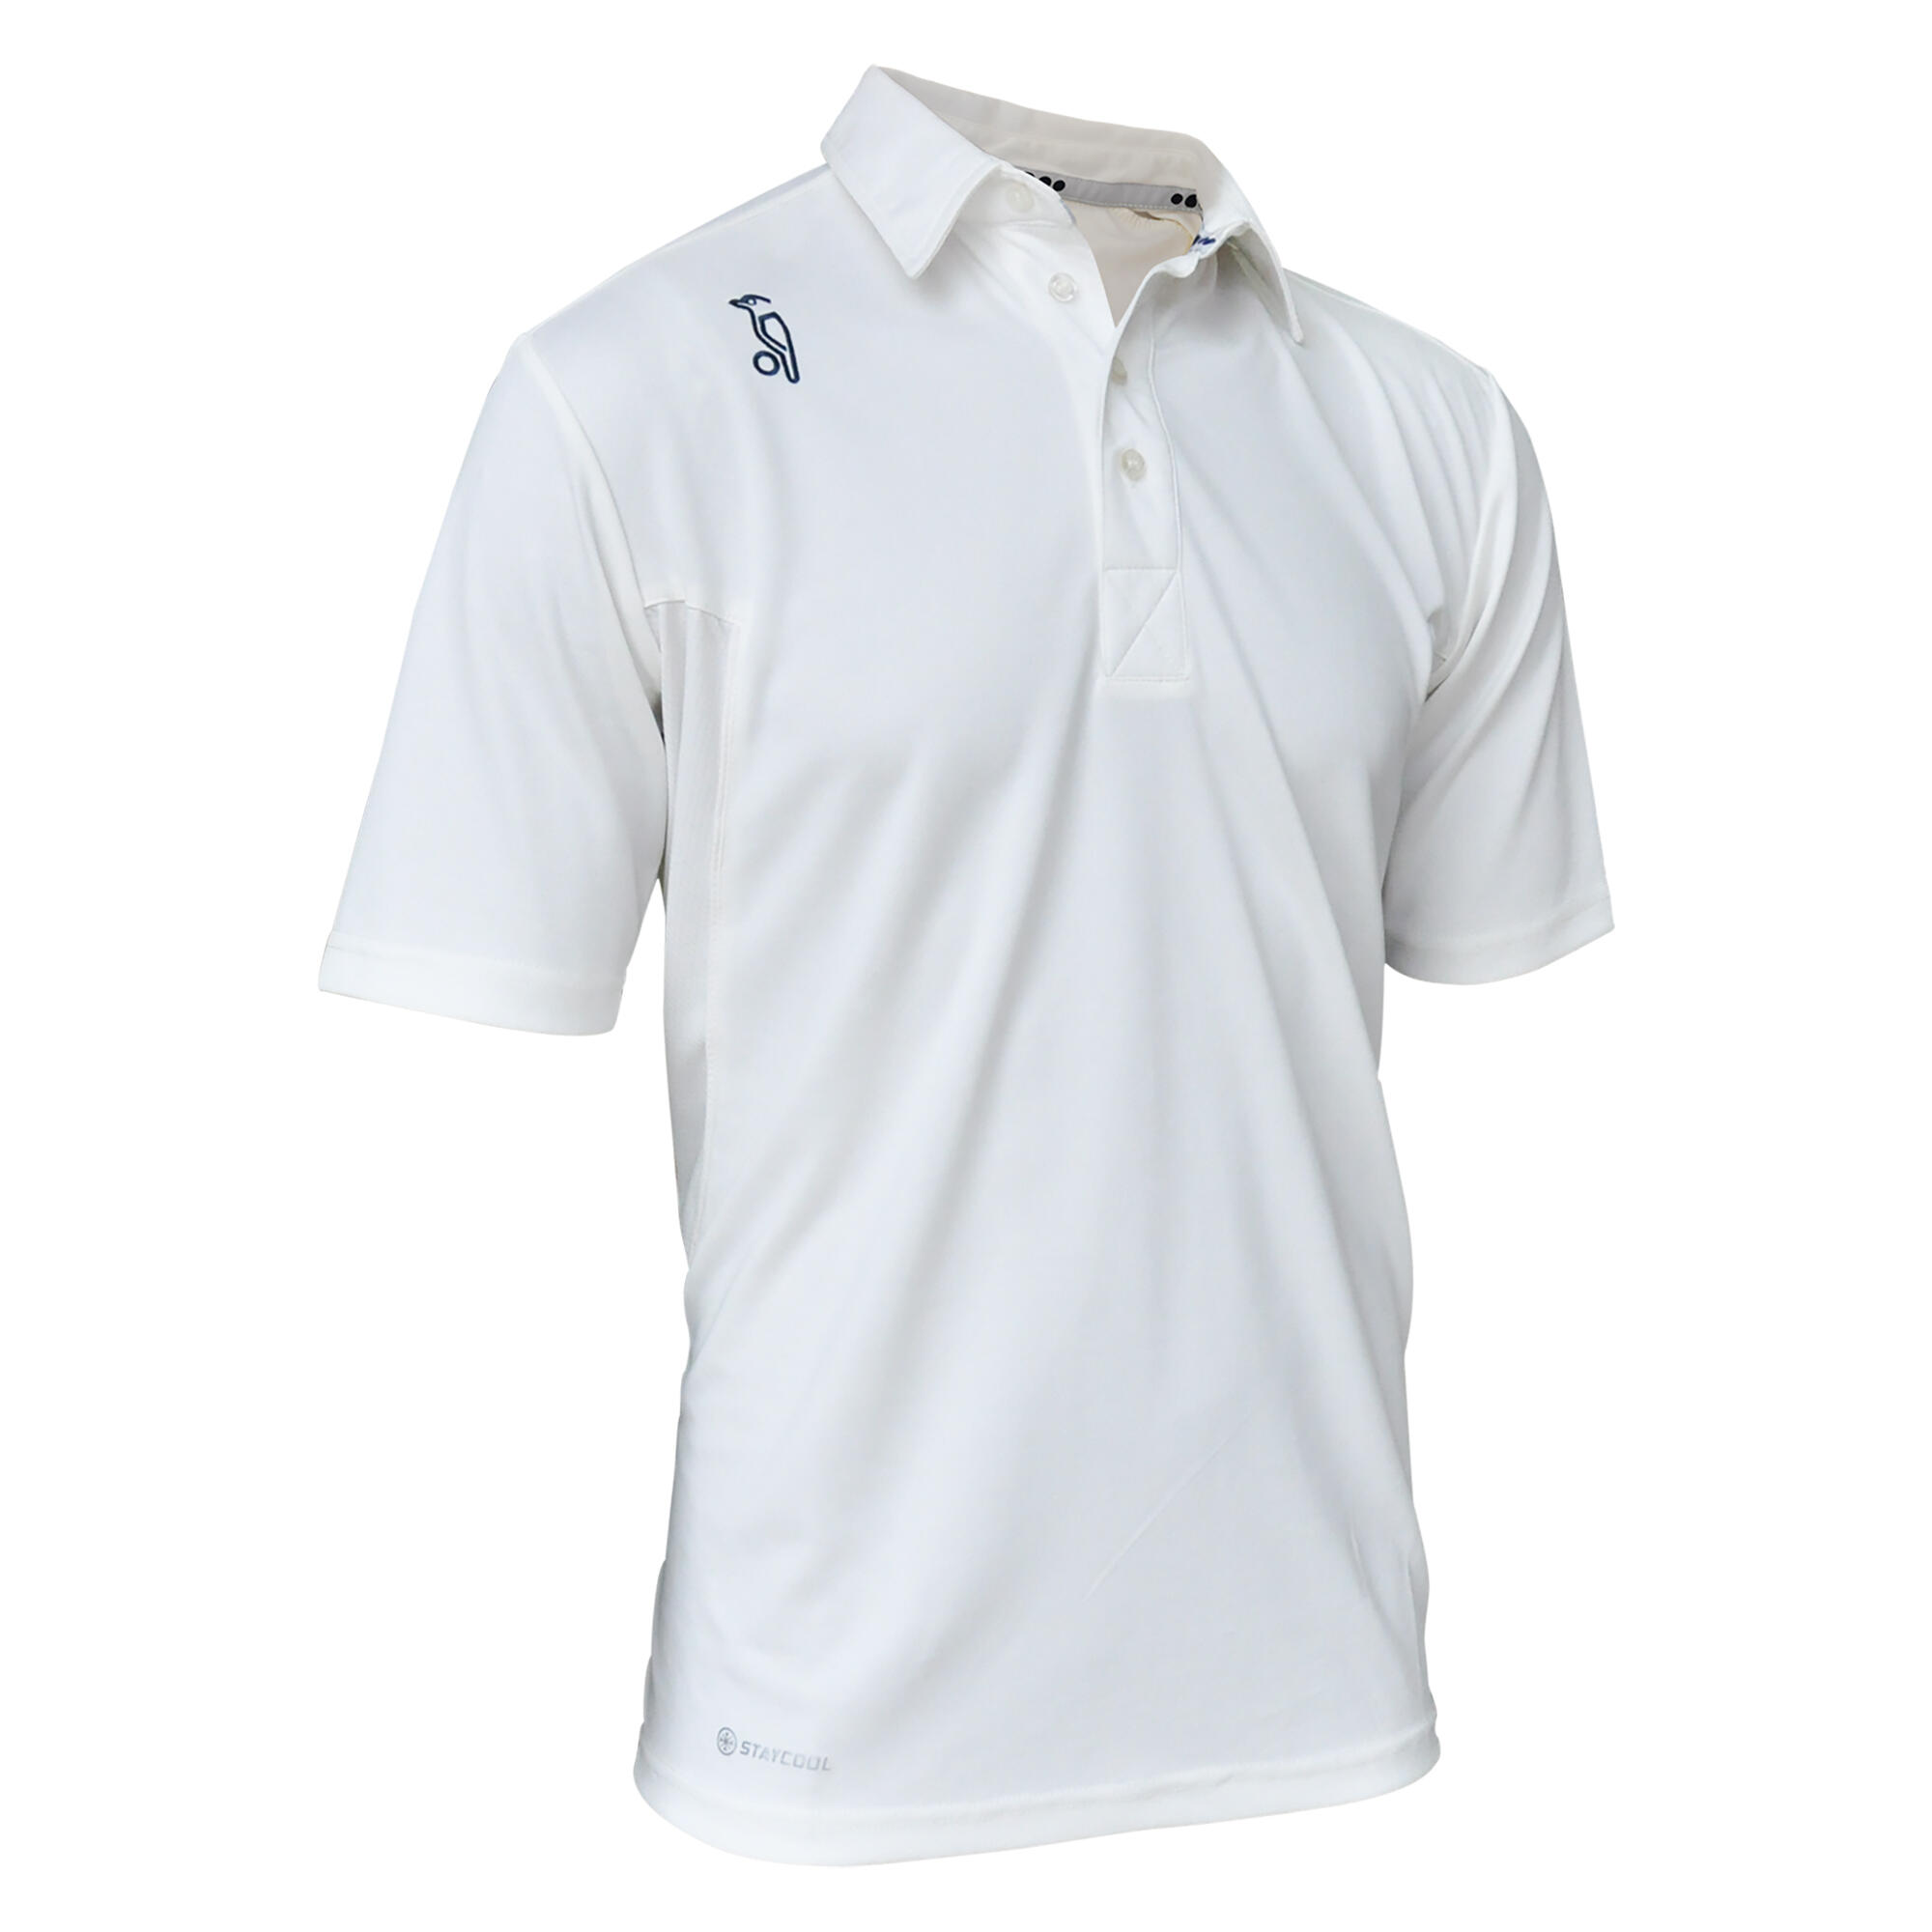 KOOKABURRA Kookaburra Pro Player Junior Cricket Shirt White